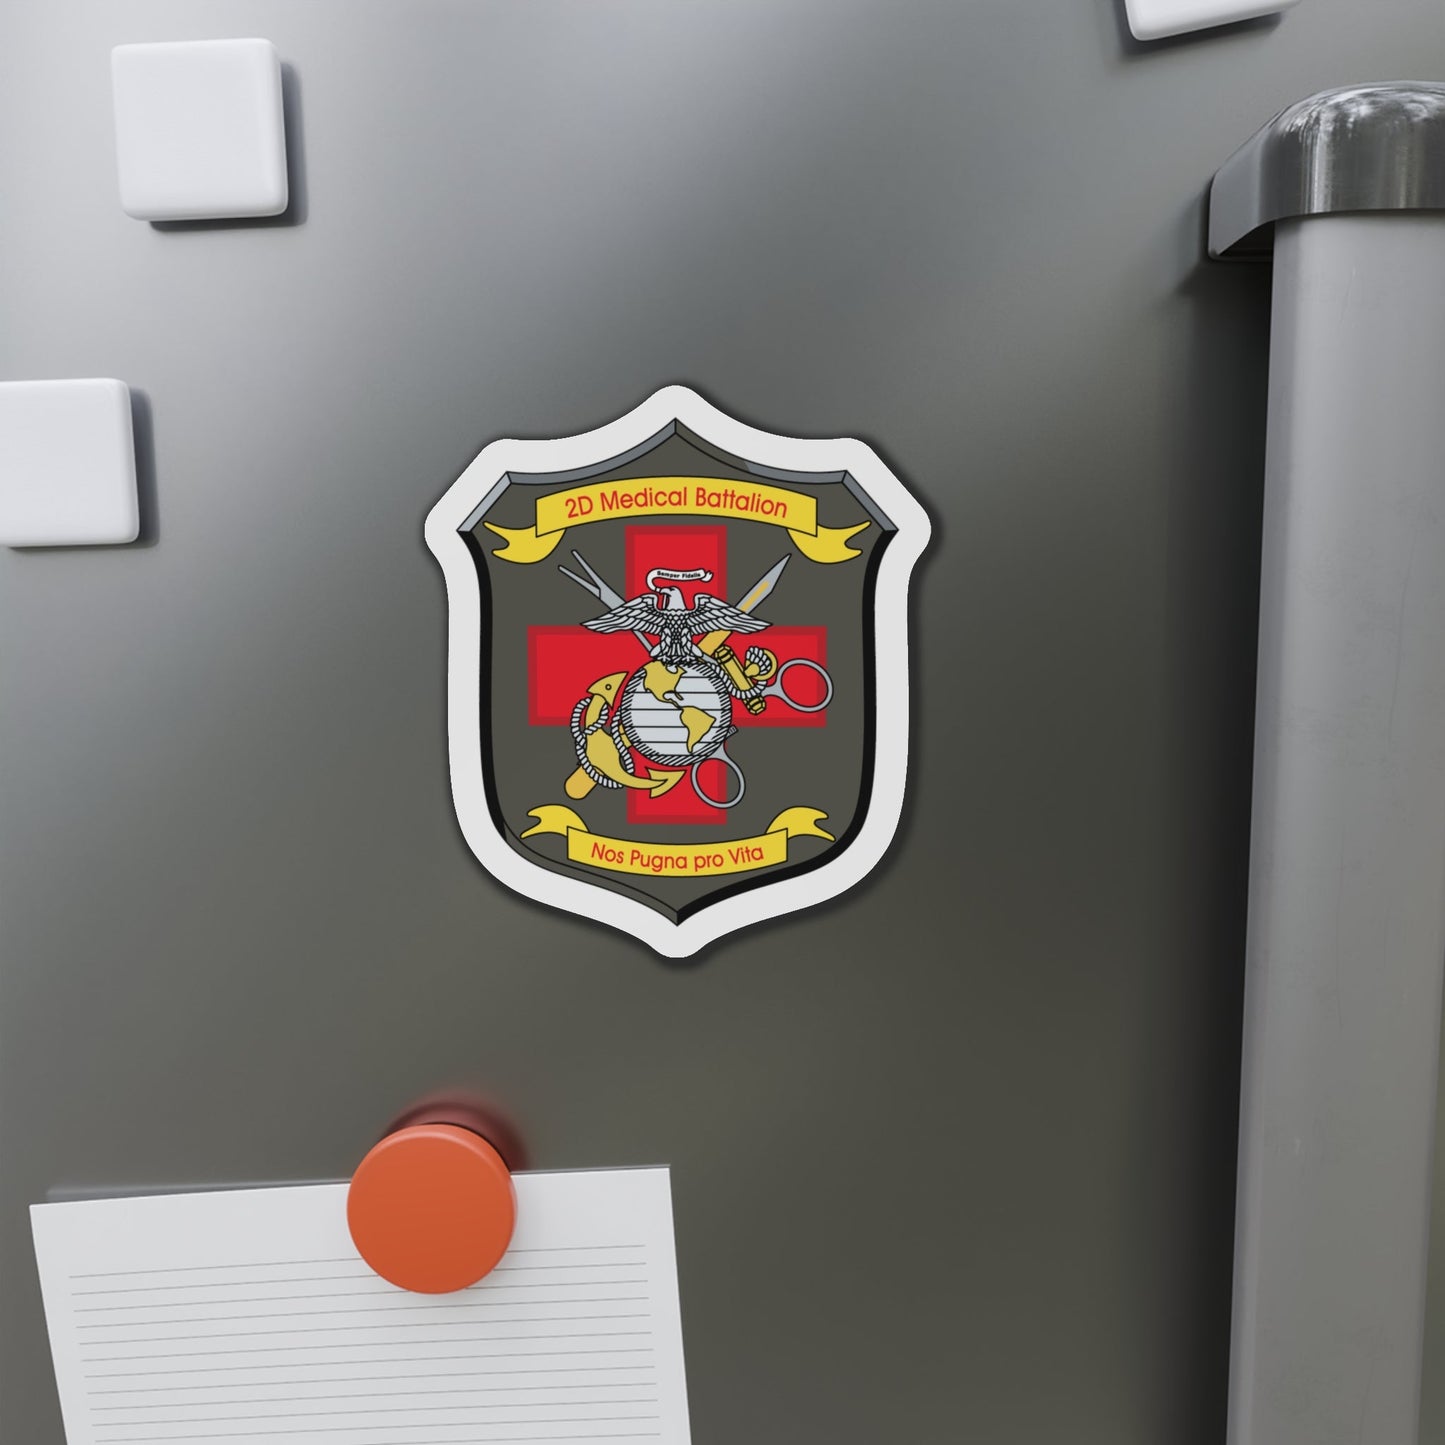 2d Medical Battalion Nos Pugna Pro Vita (USMC) Die-Cut Magnet-The Sticker Space